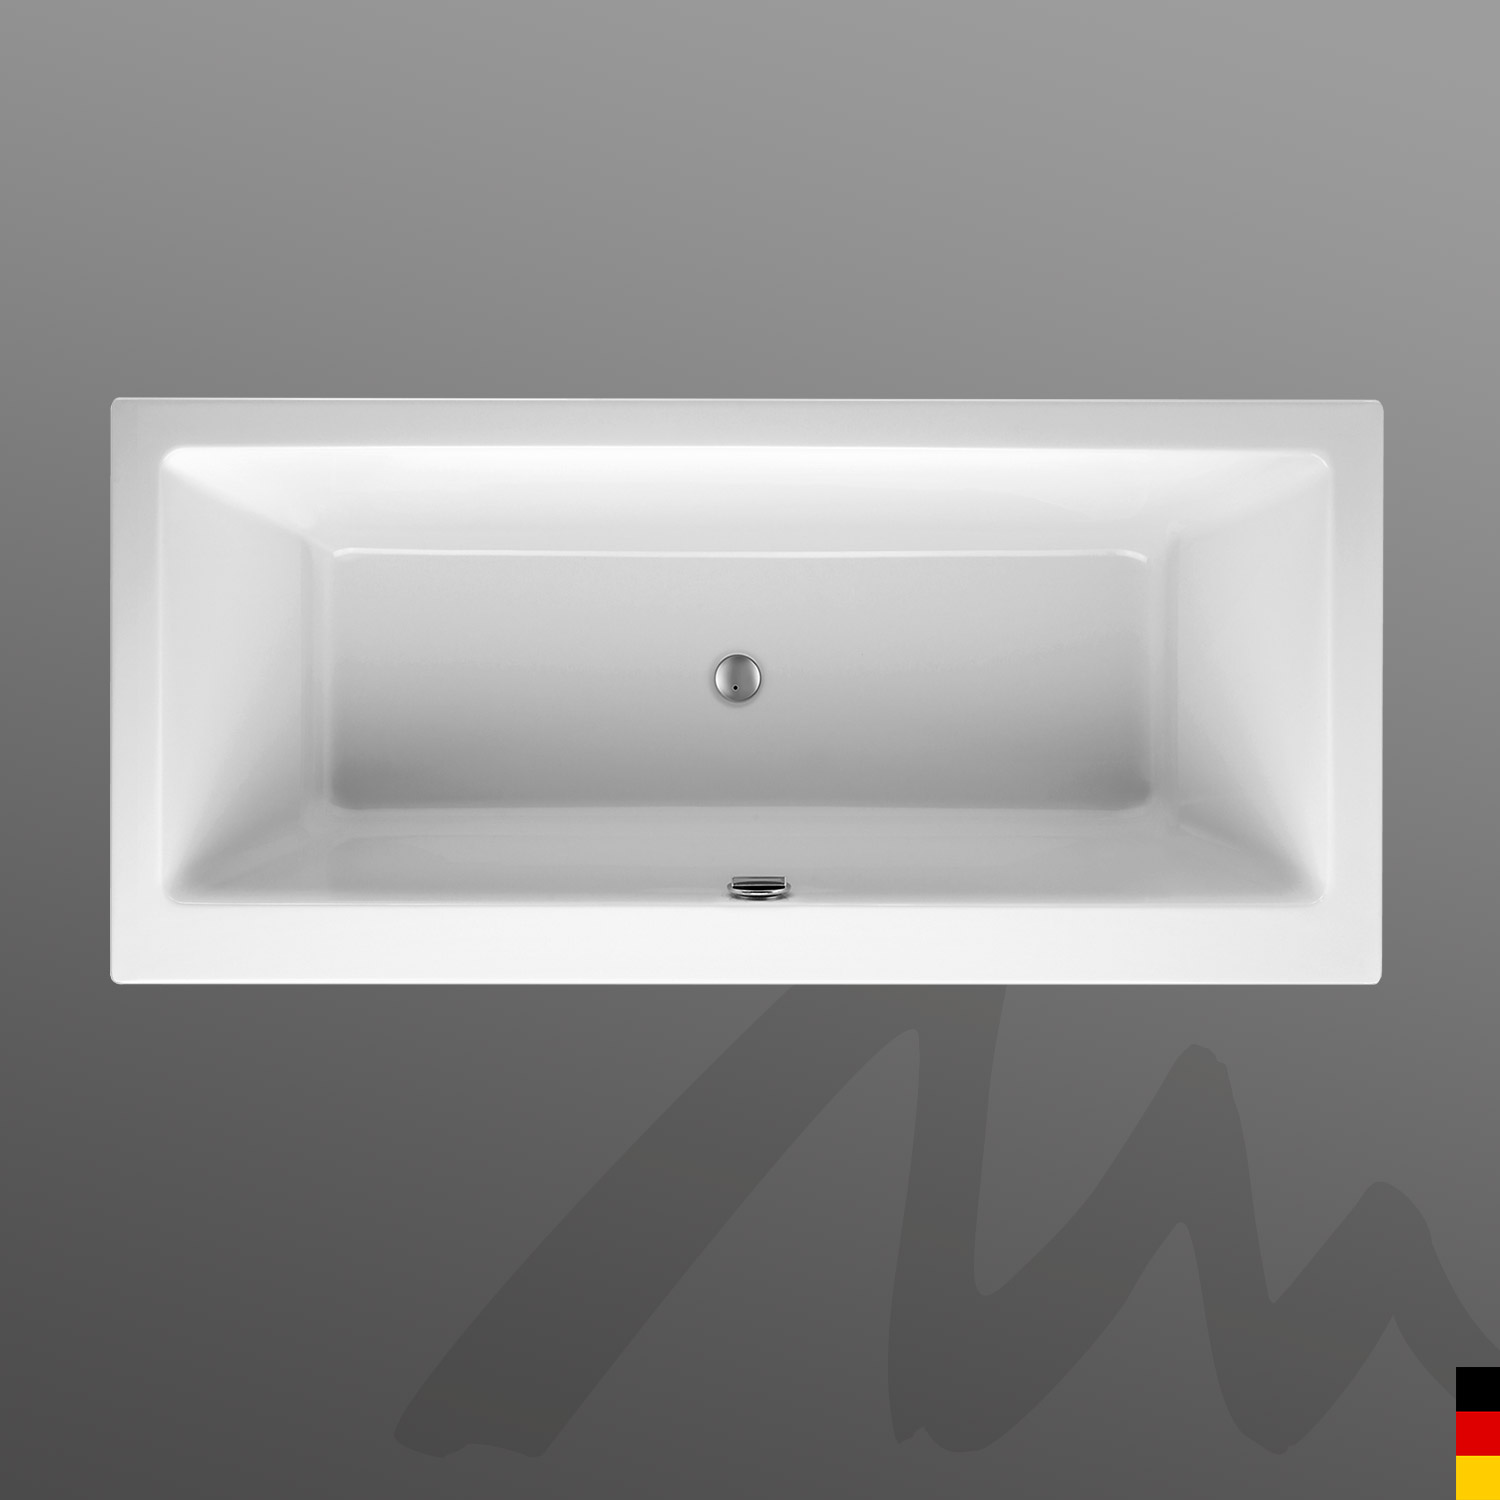 Mauersberger Badewanne Rechteck Perfo 180/80  180x80x51cm  Farbe:weiß